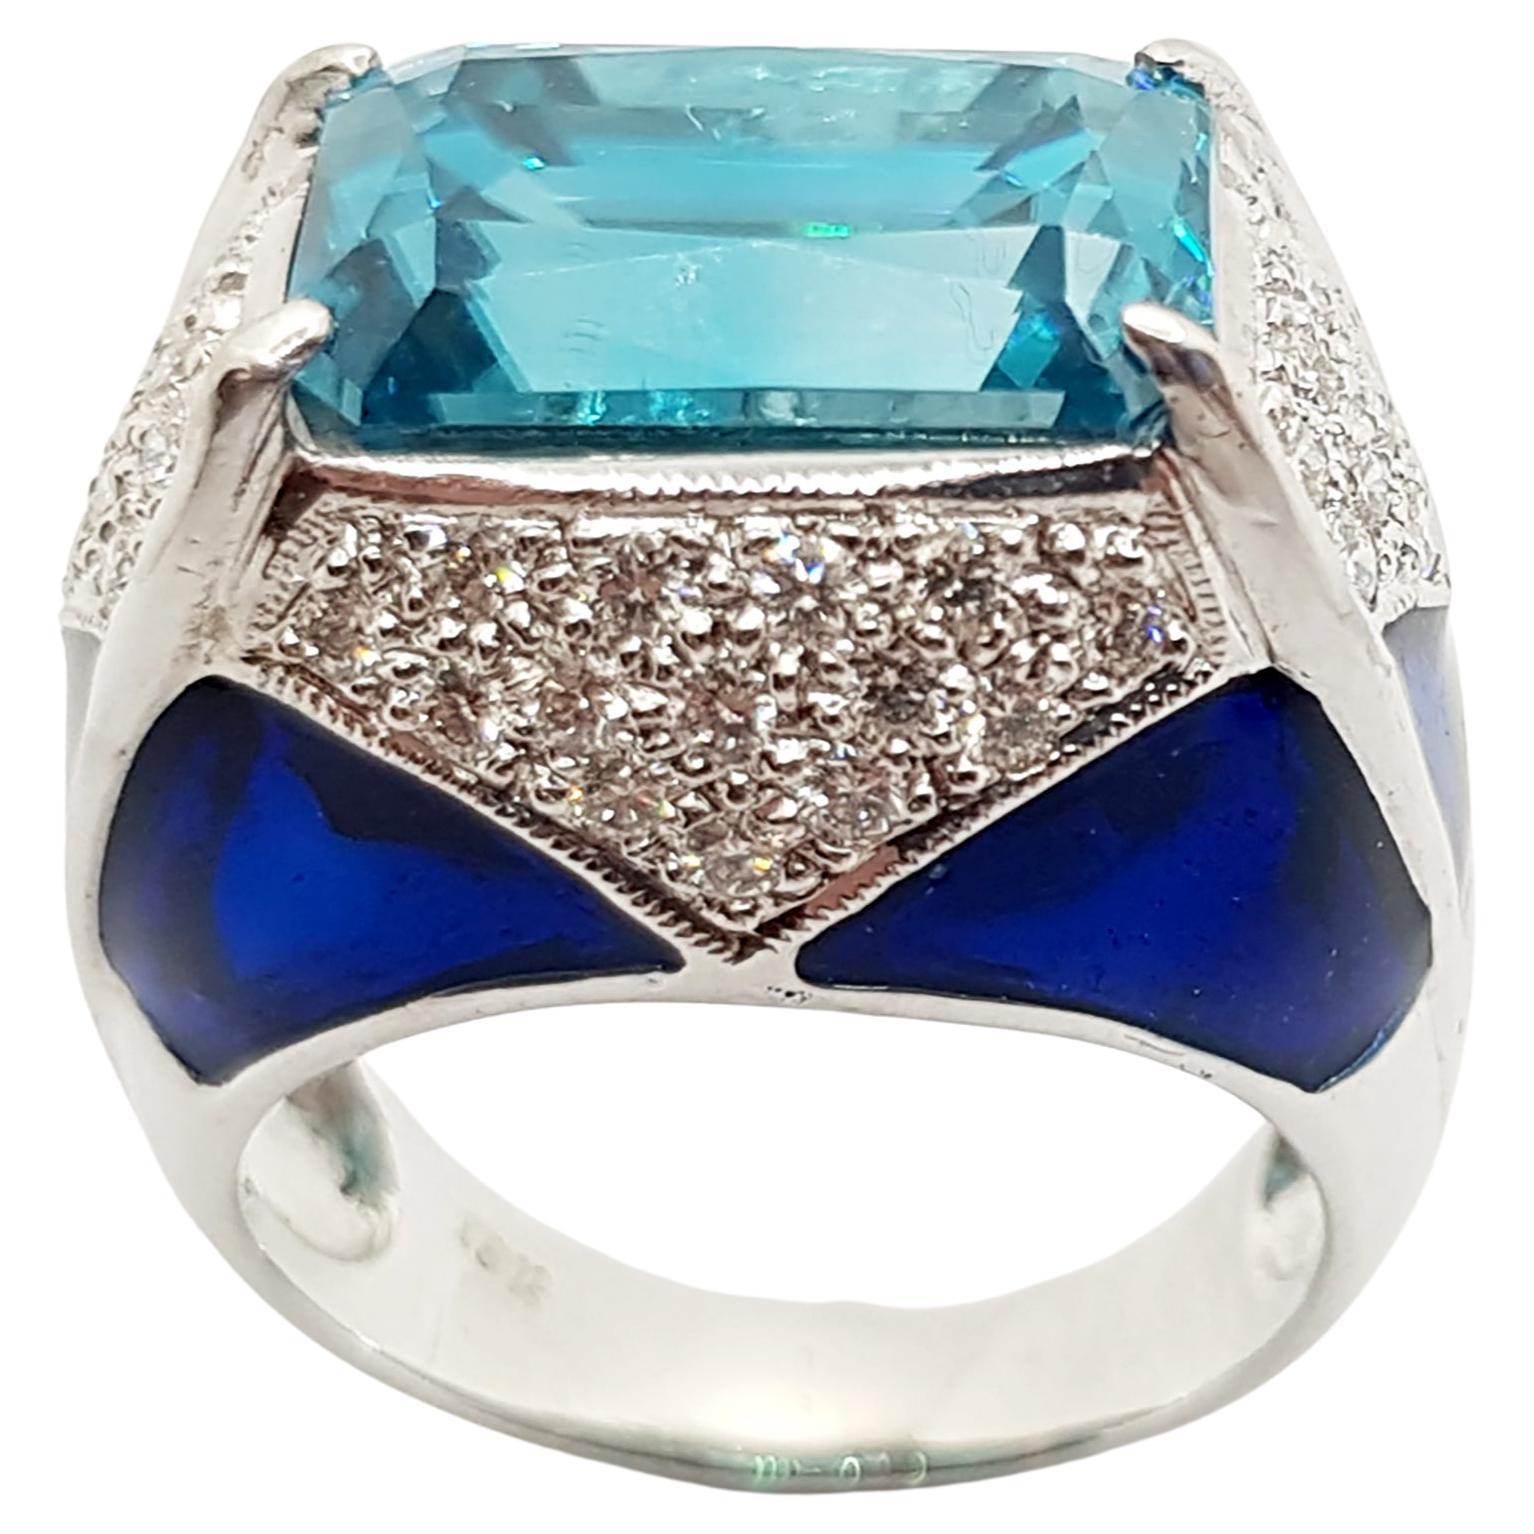 Blue Zircon with Diamond Ring Set in 18 Karat White Gold Settings